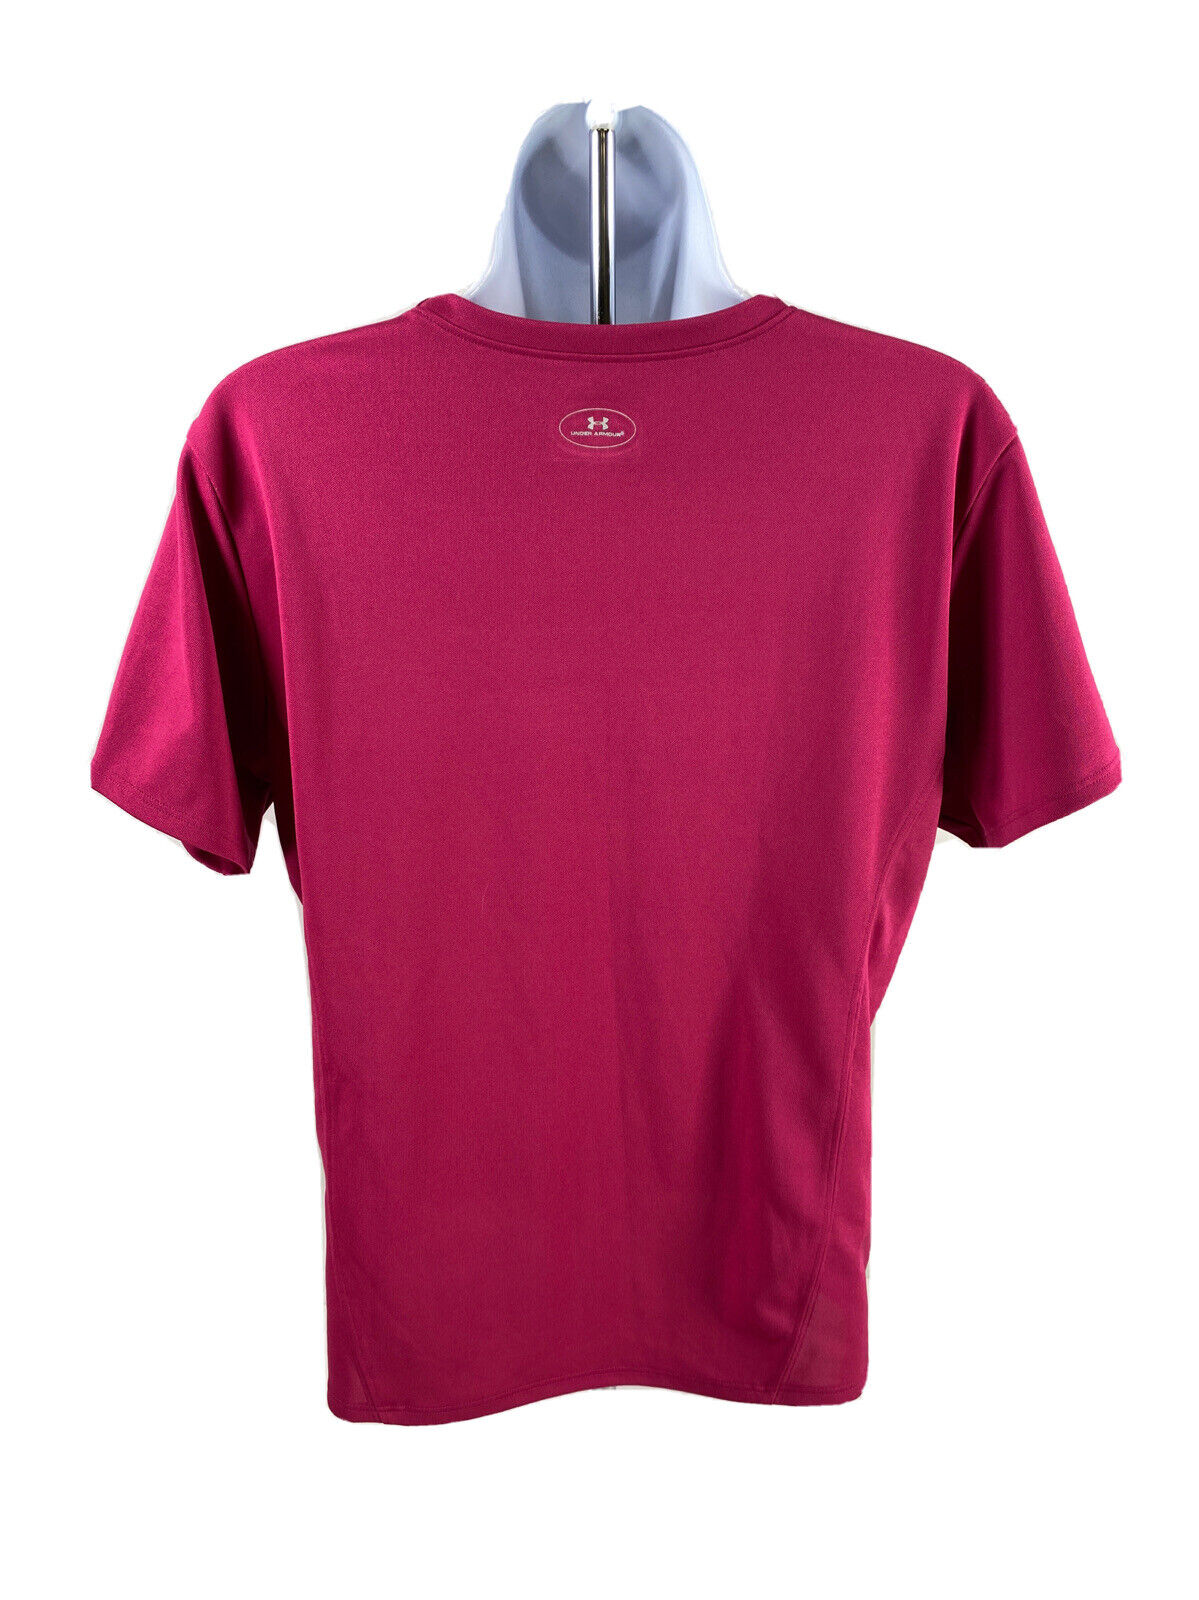 NEW Under Armour Women's Purple Short Sleeve Athletic Shirt - L